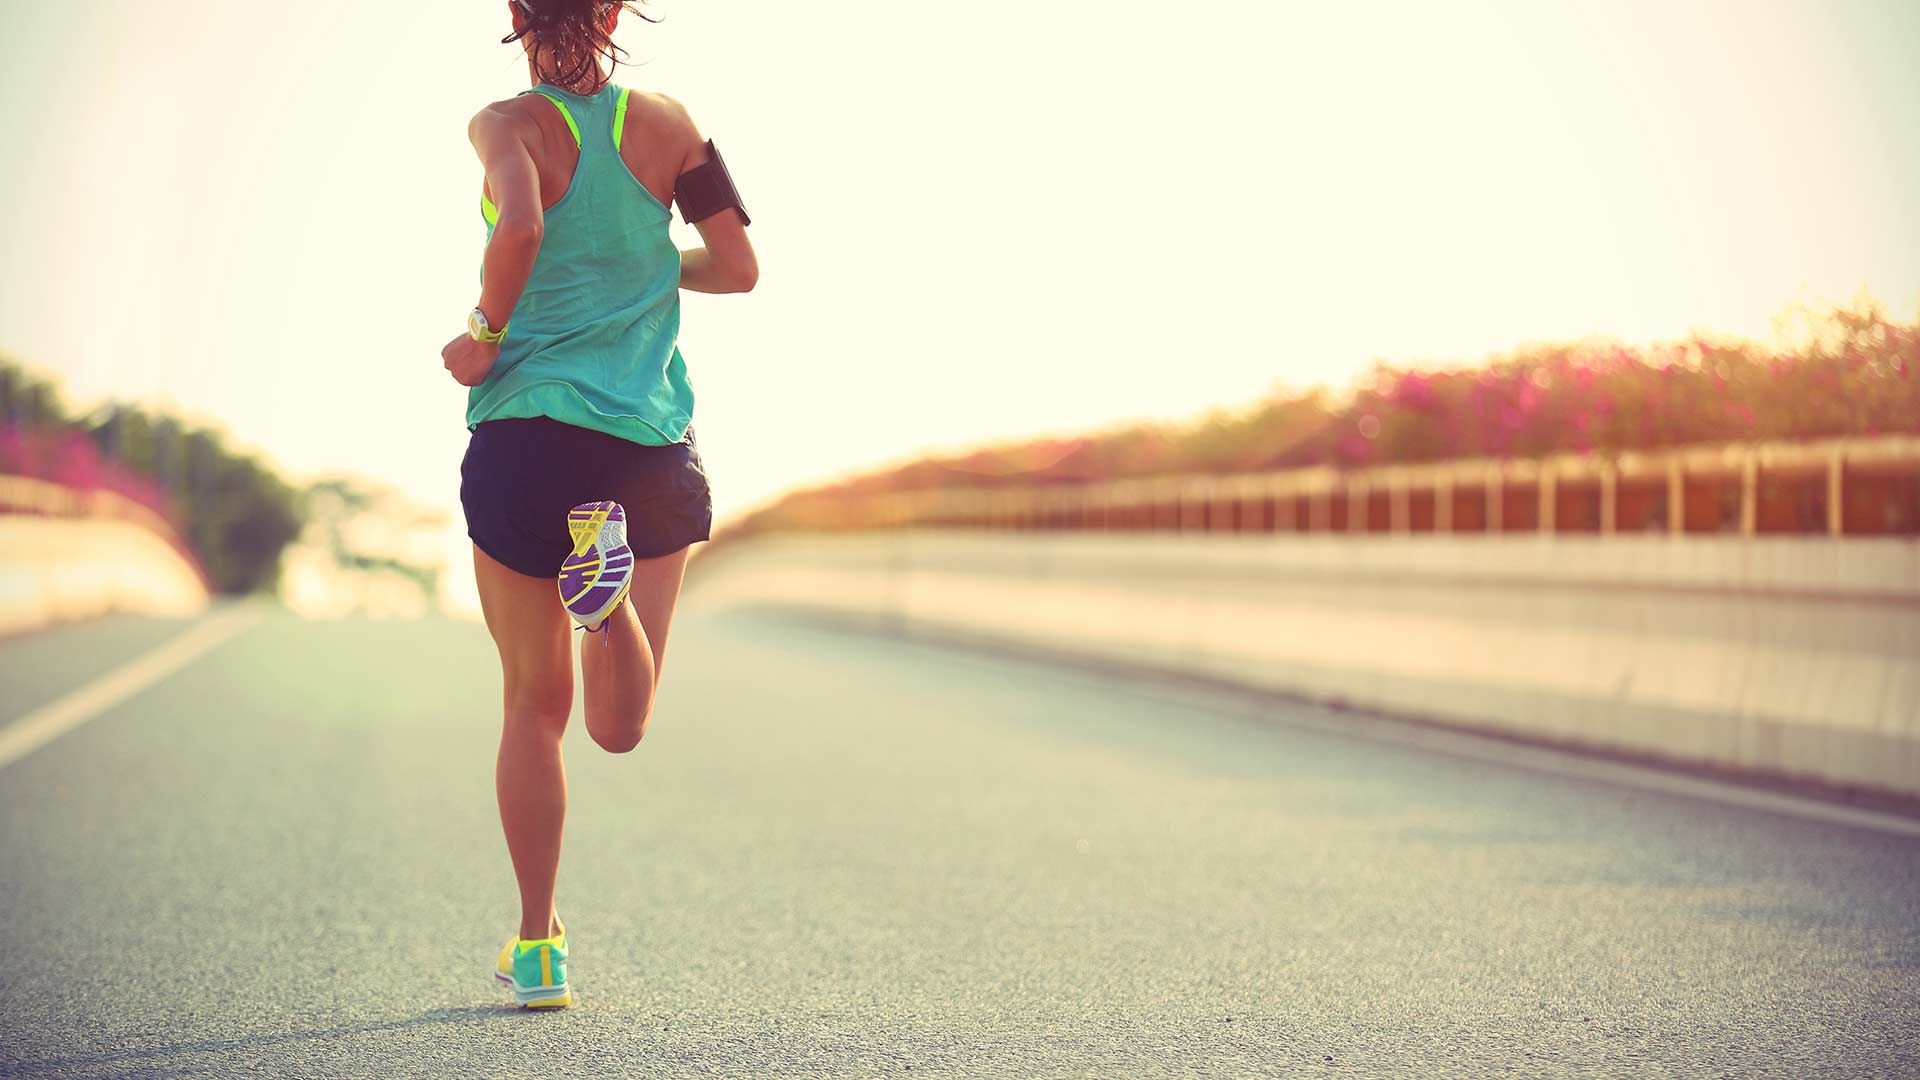 Benefits of Running